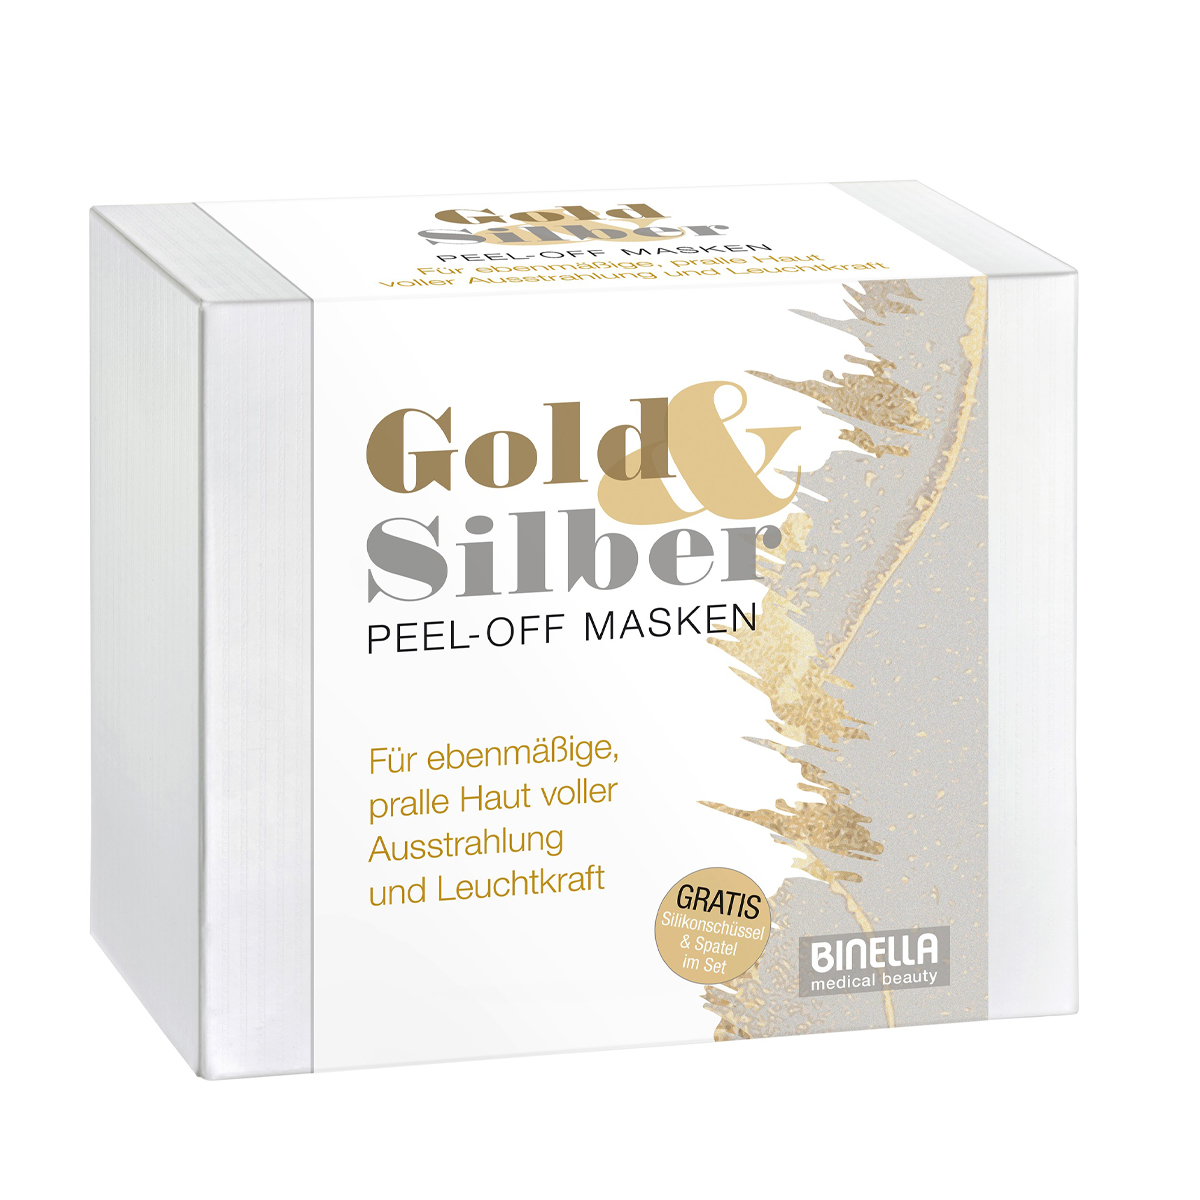 BINELLA GOLD & SILVER GLOW MASK - LIMITED EDITION 8x15g